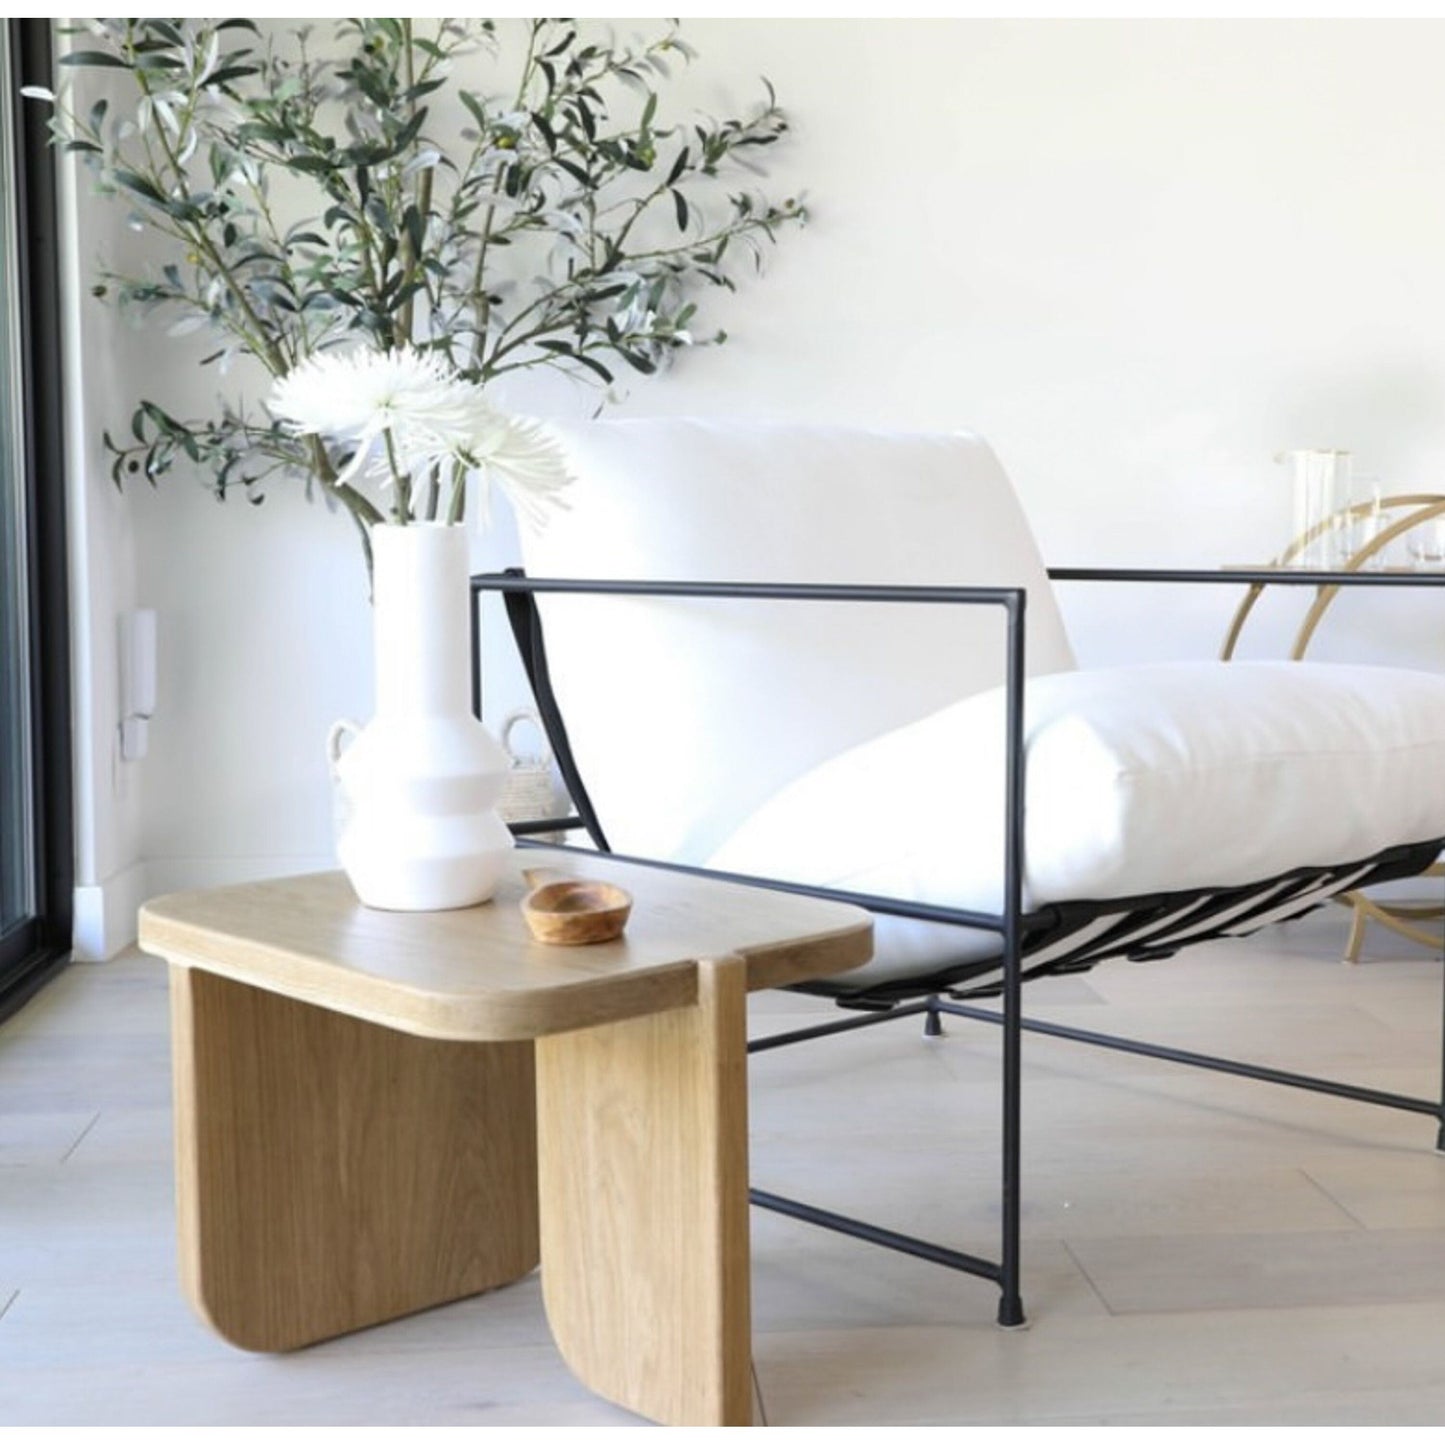 Solid Oak Stool | Sculptural Side Table | White Oak Coffee Table | Made in LA